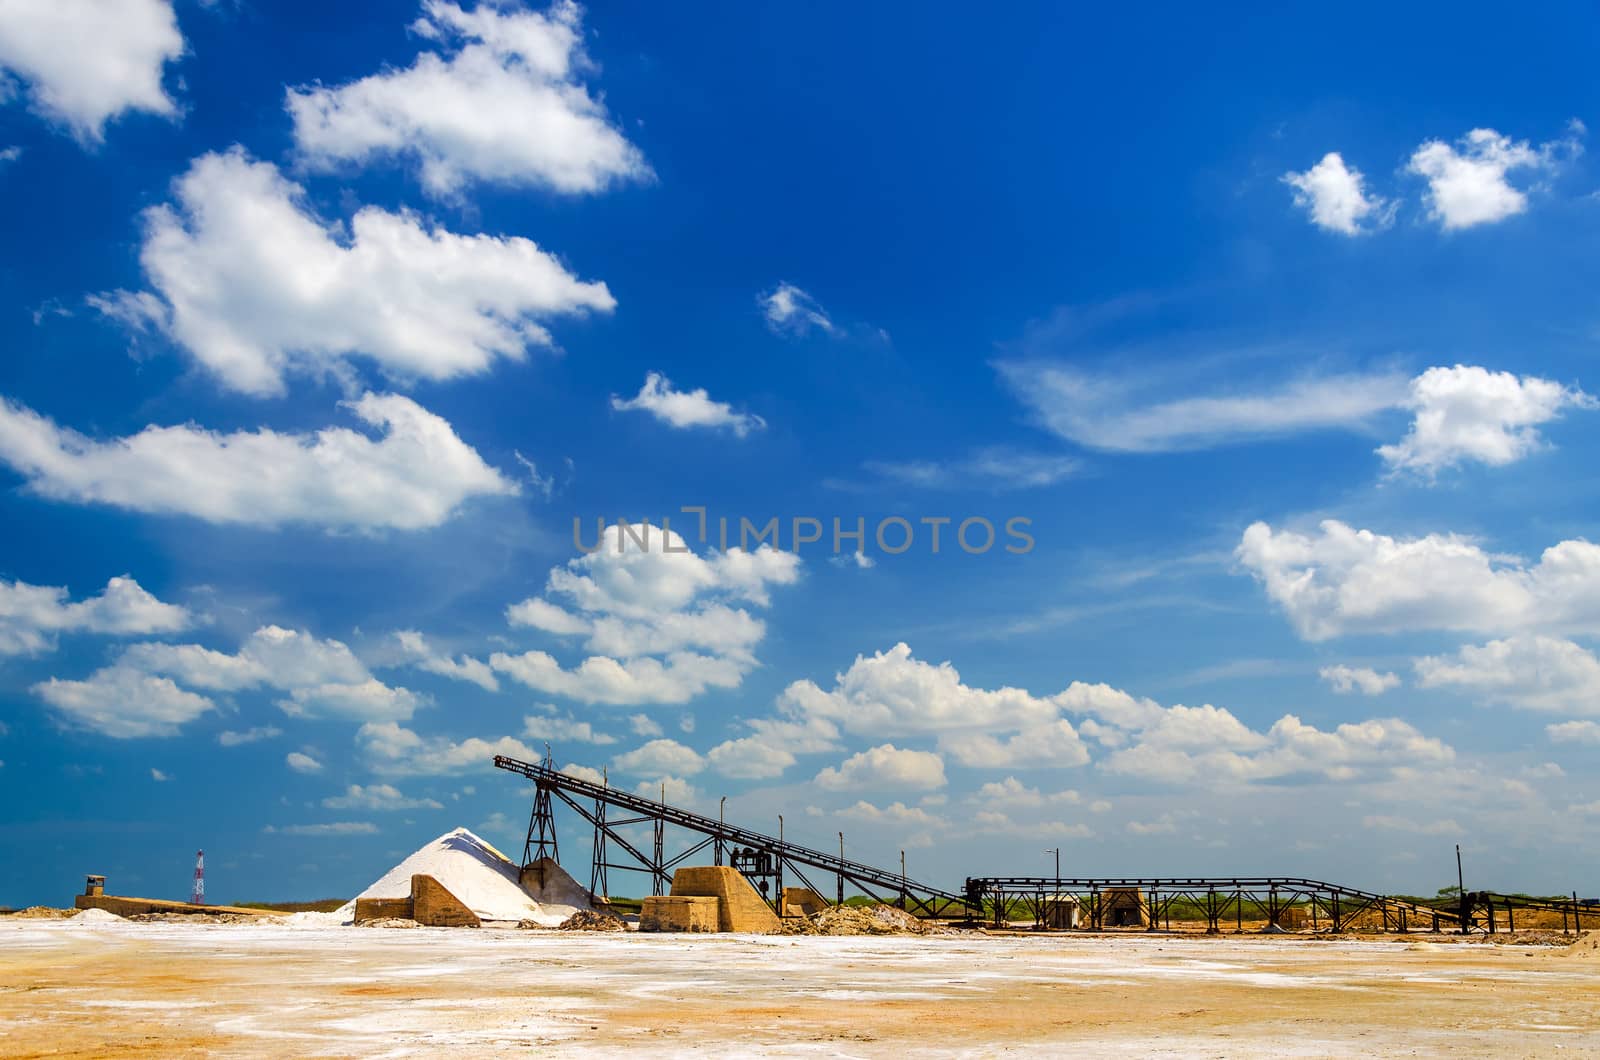 Salt Production Factory by jkraft5